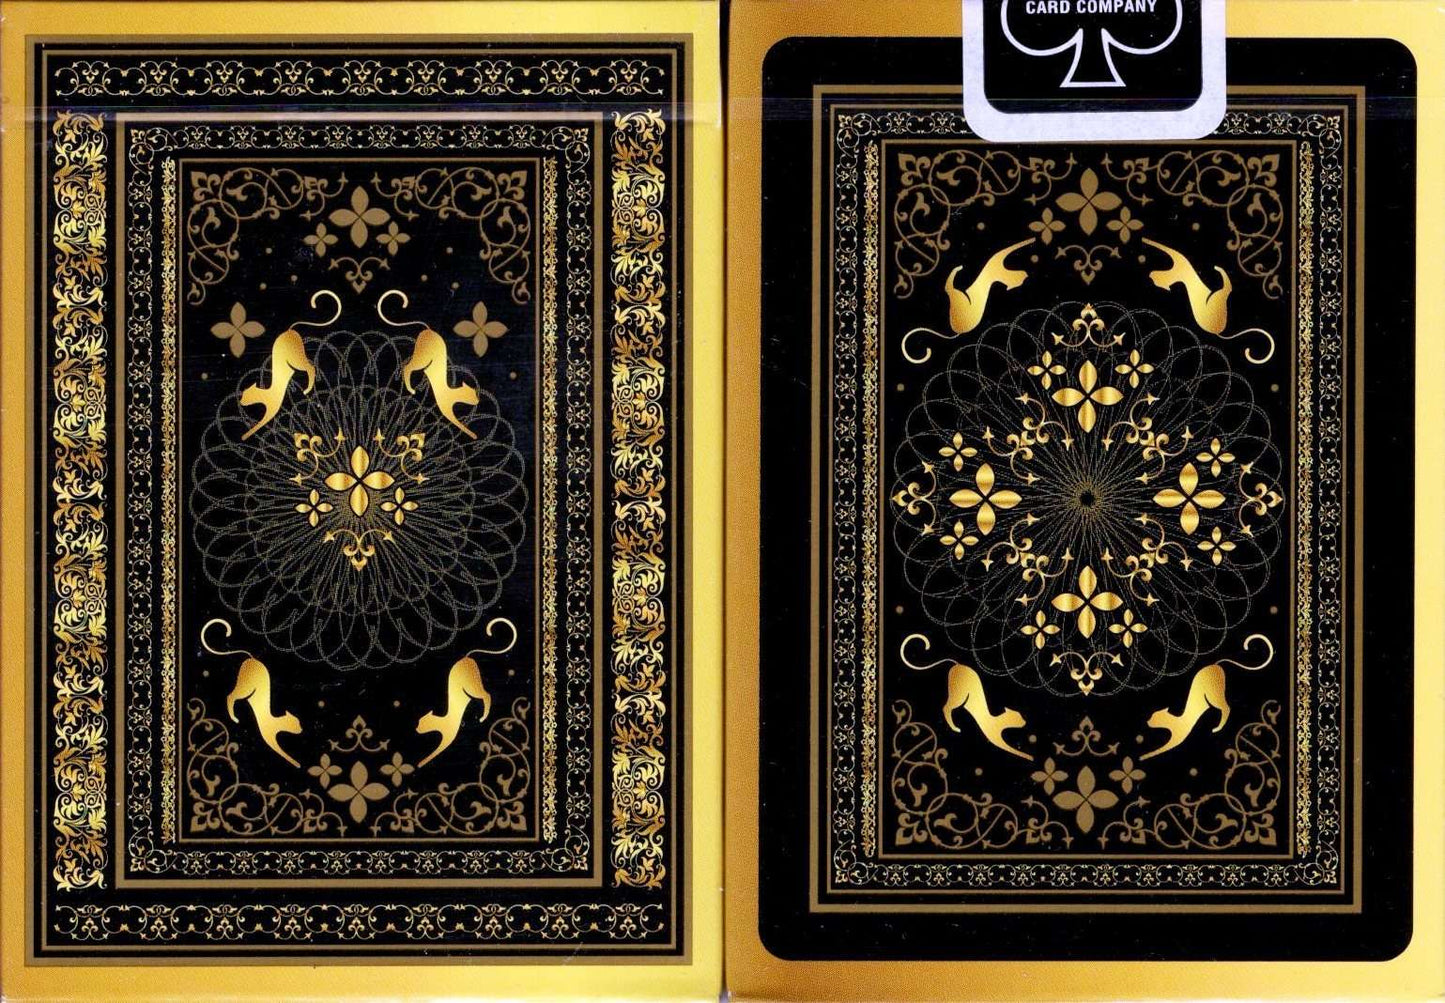 PlayingCardDecks.com-The Other Kingdom Animal Edition Playing Cards USPCC